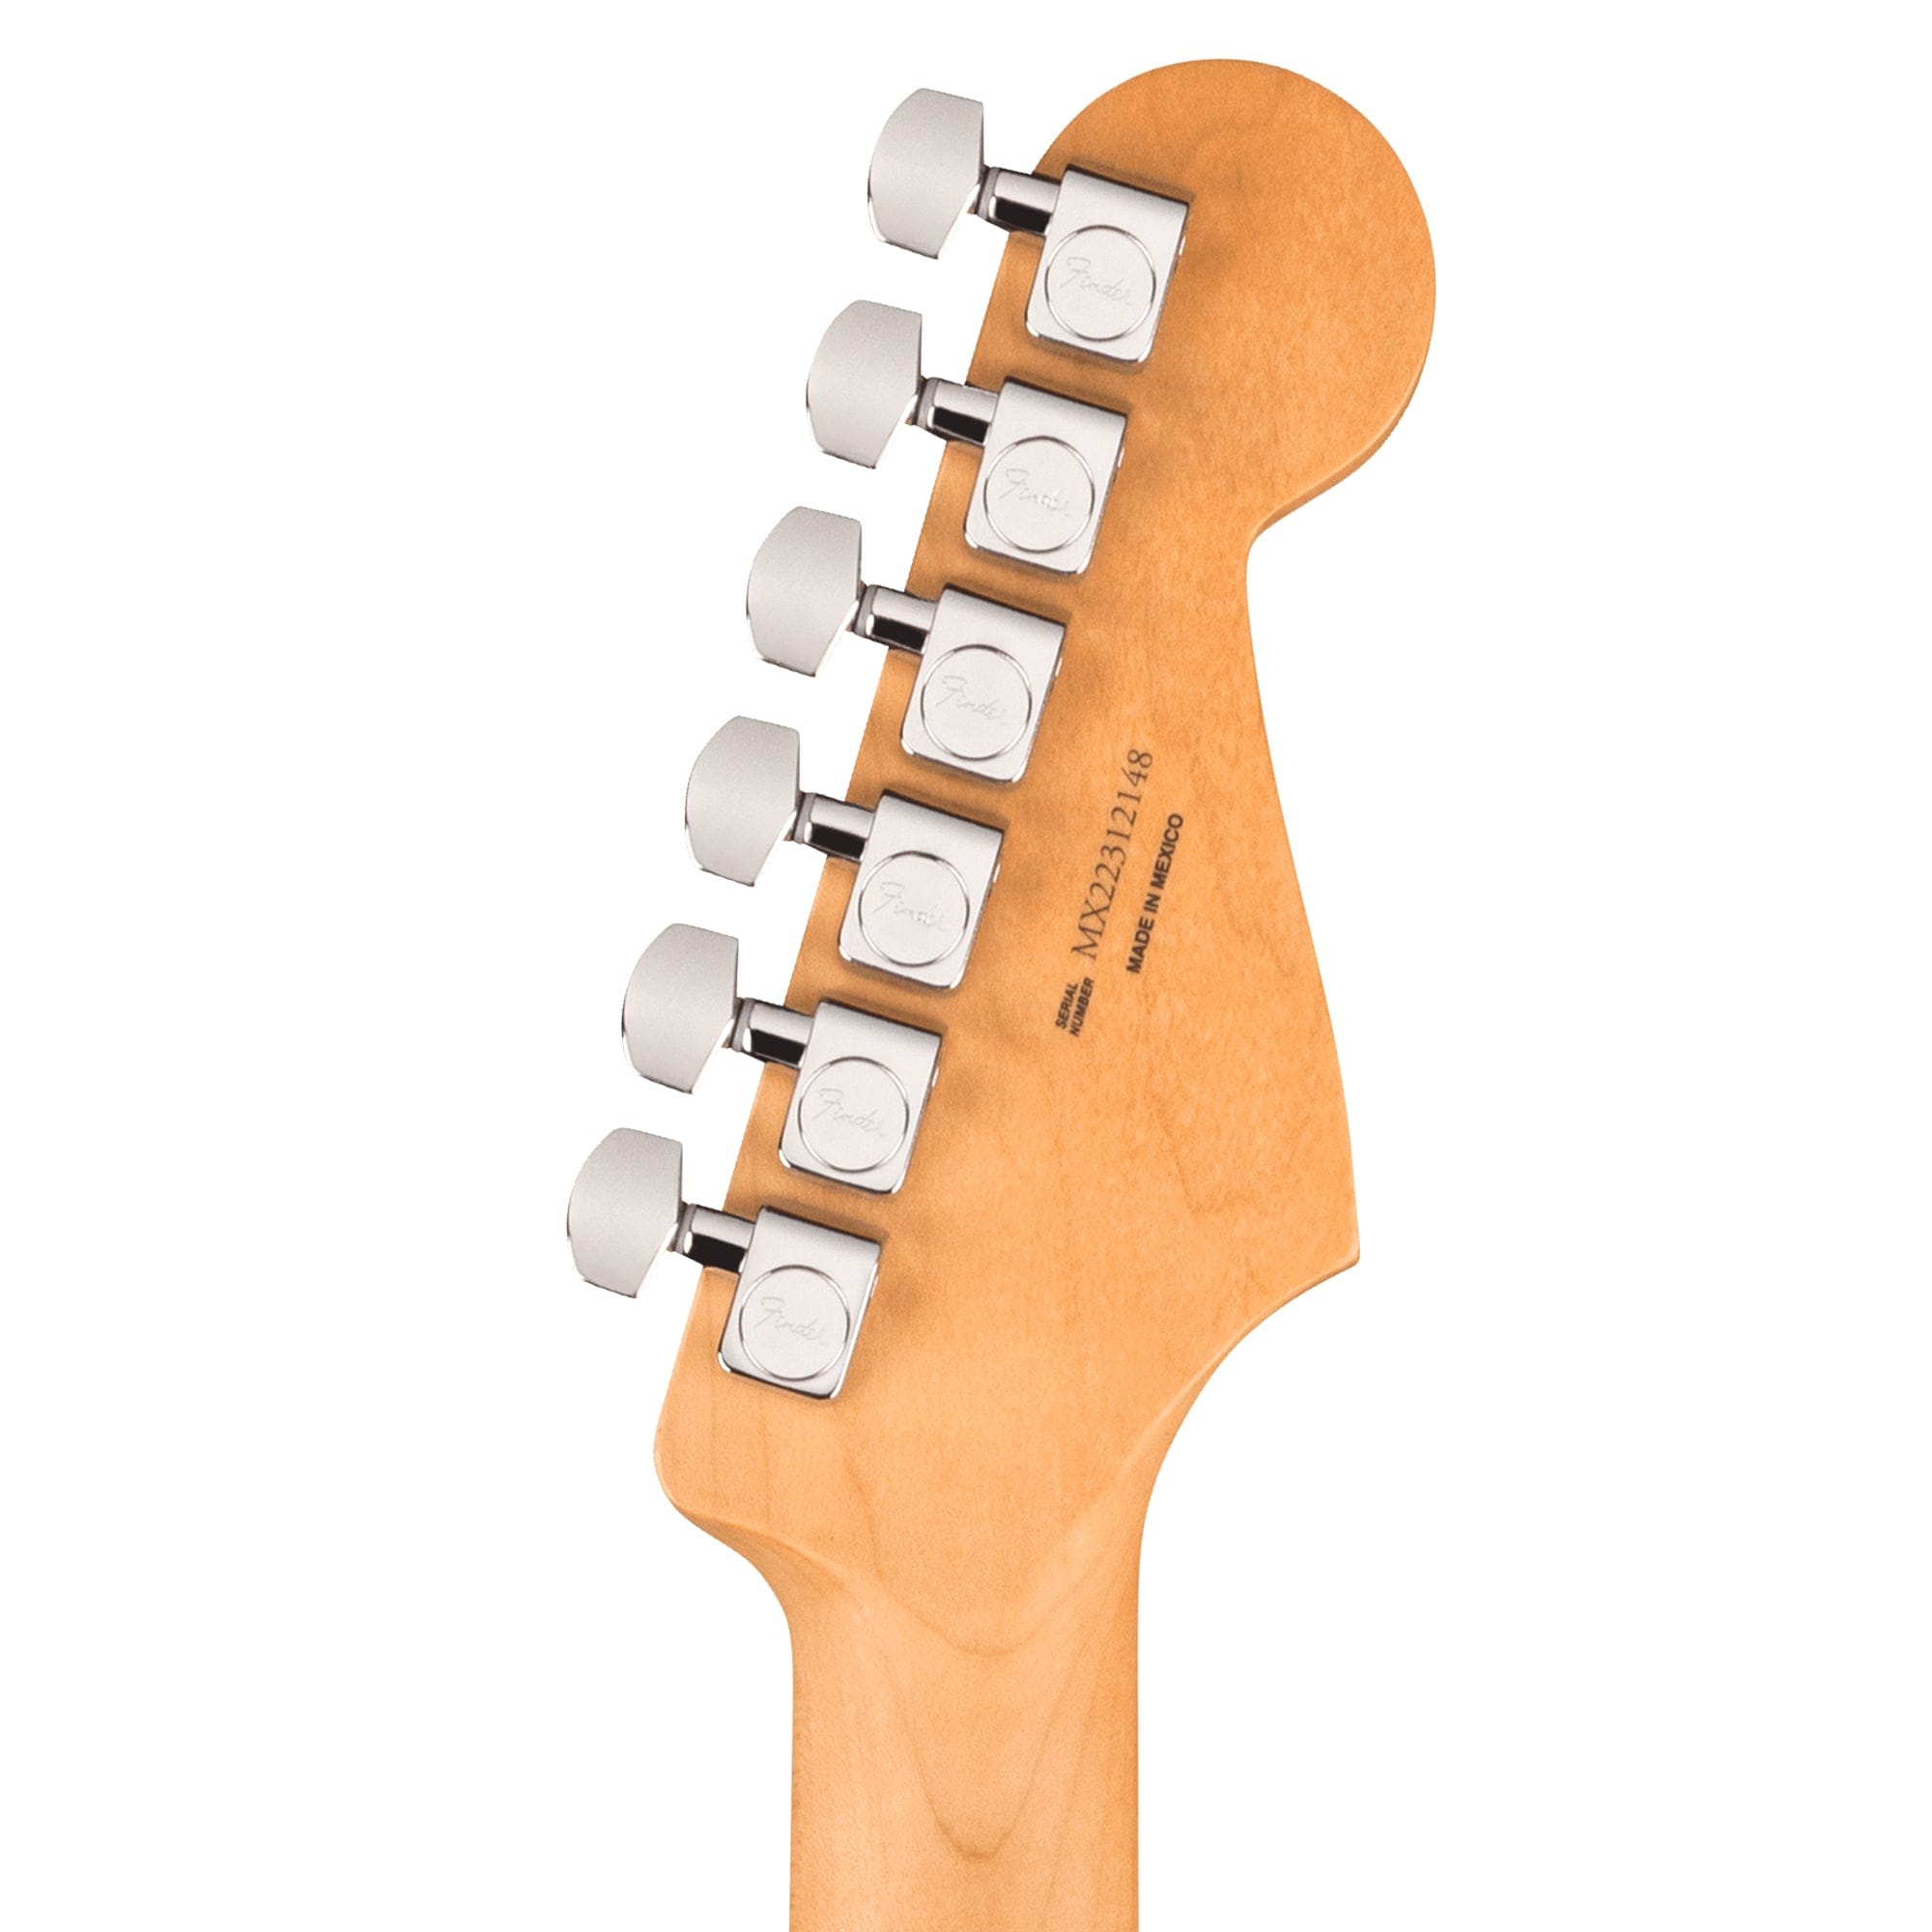 Fender Player Stratocaster Left-Handed Candy Apple Red Electric Guitars / Left-Handed